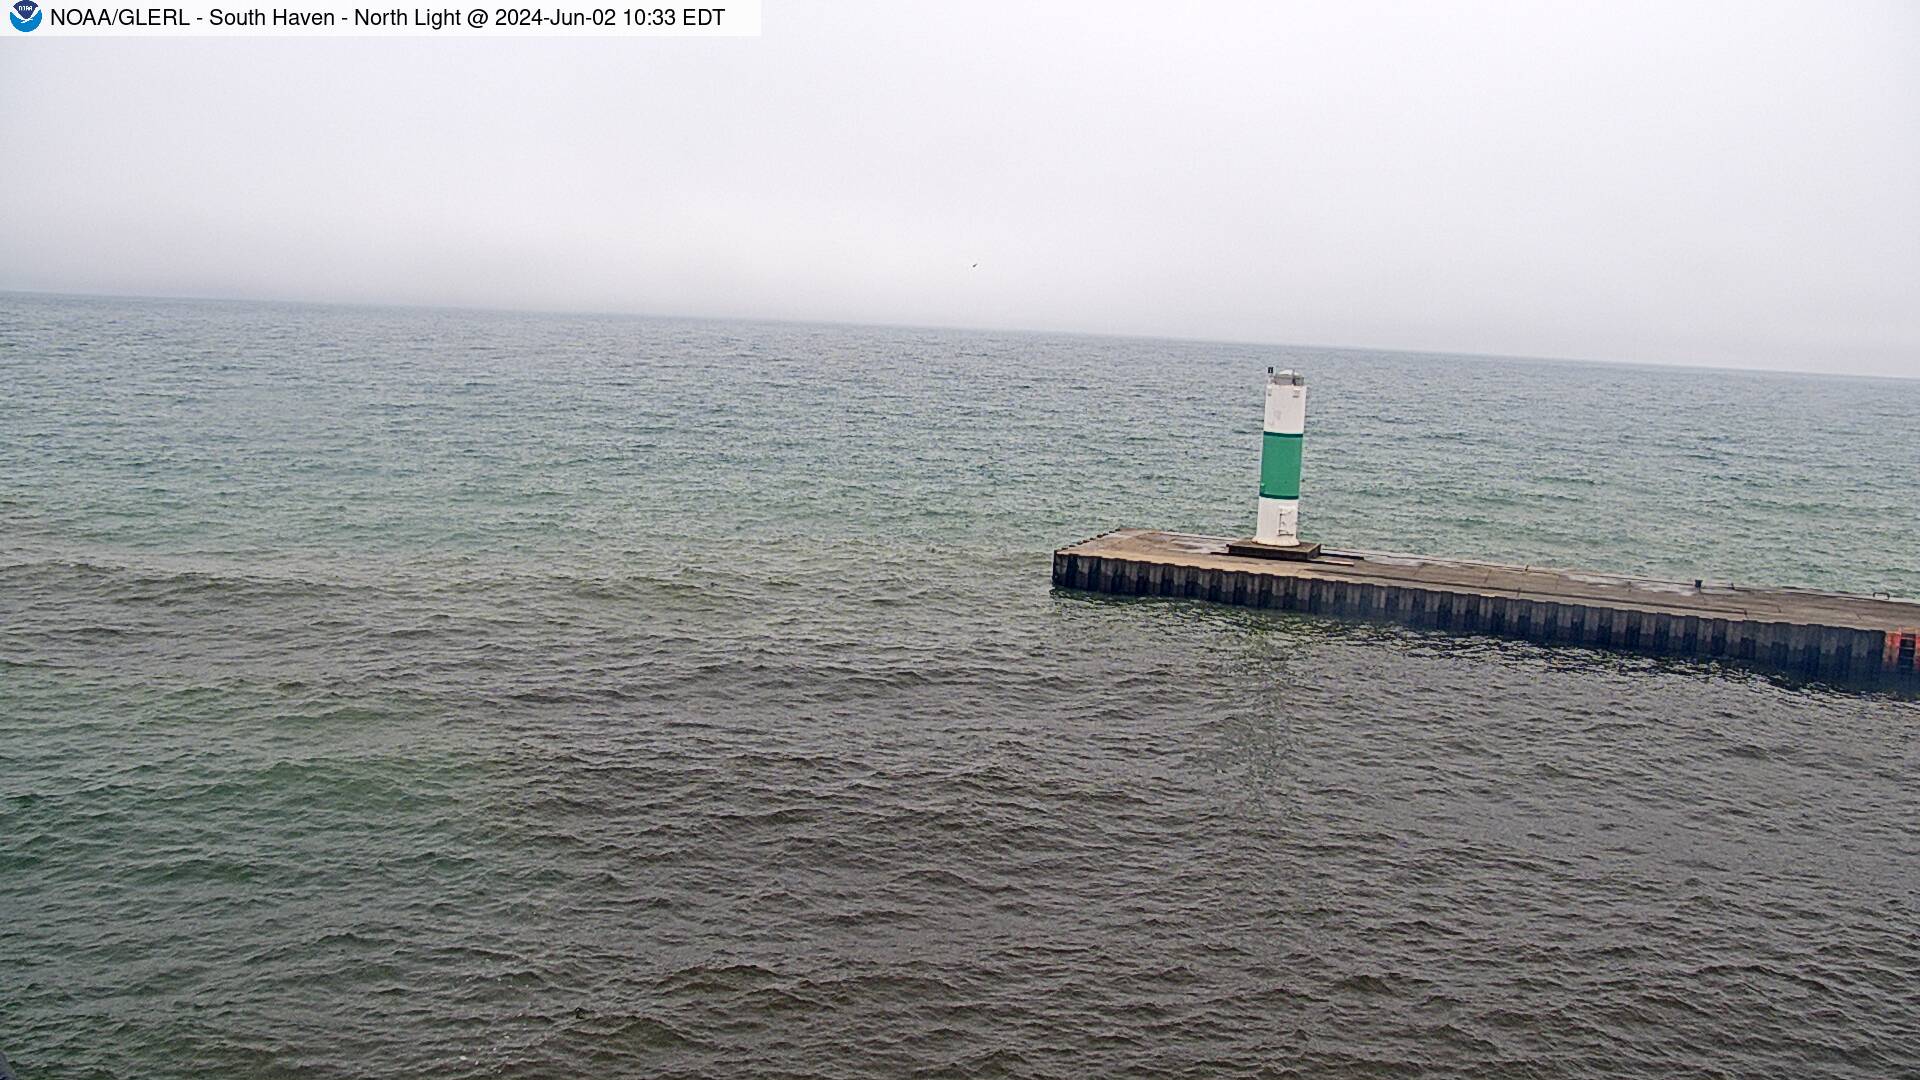 South Haven, Michigan Mer. 10:35